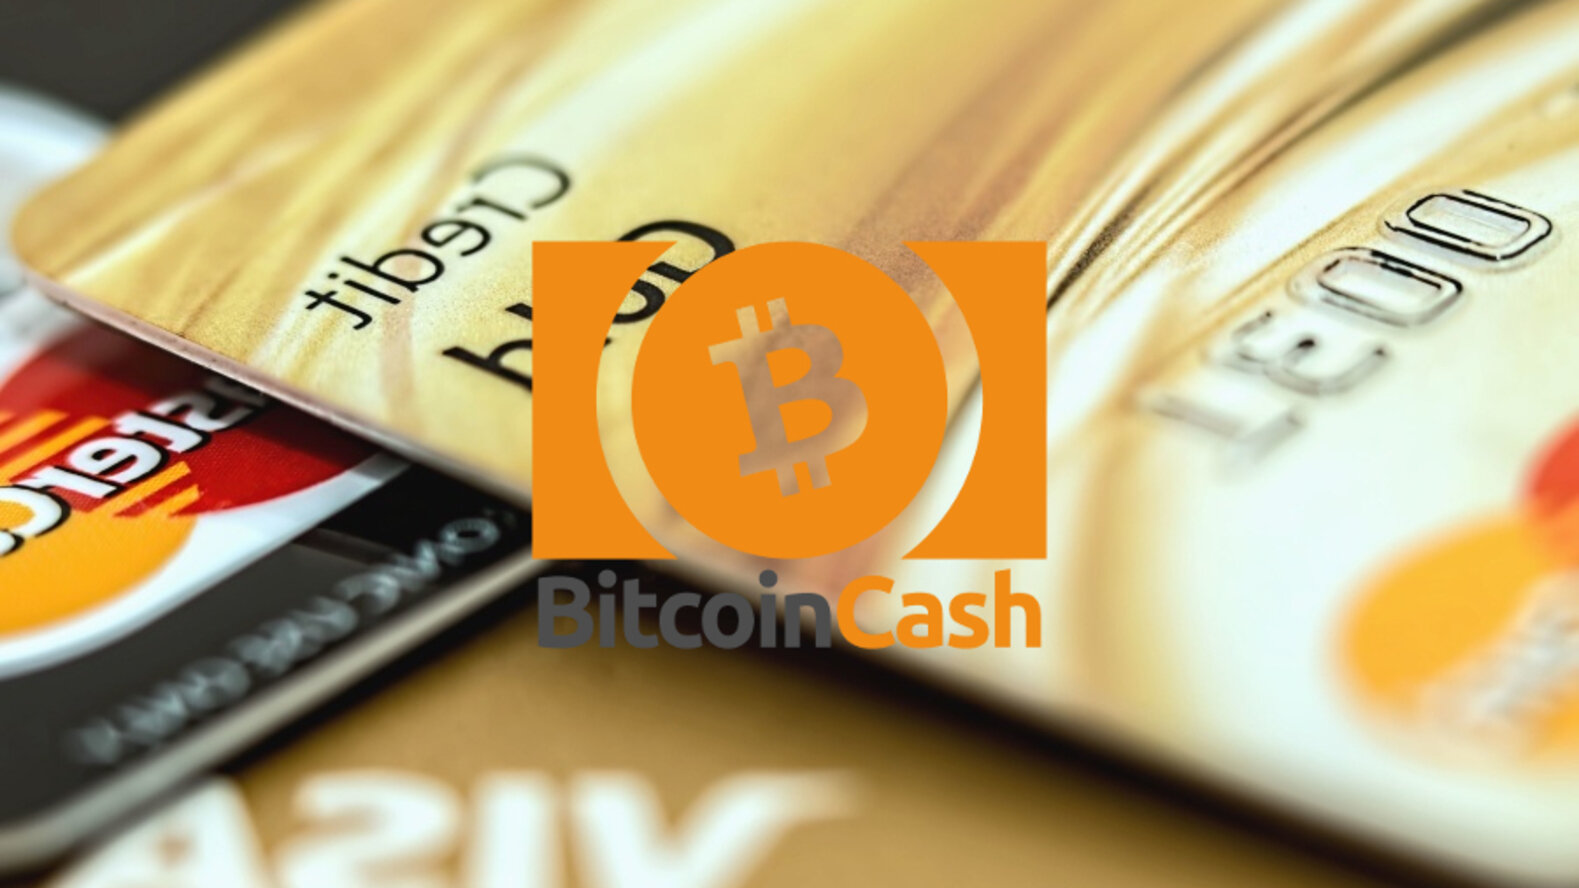 Cómo comprar Bitcoin Cash - Guía para principiantes 2021 ...